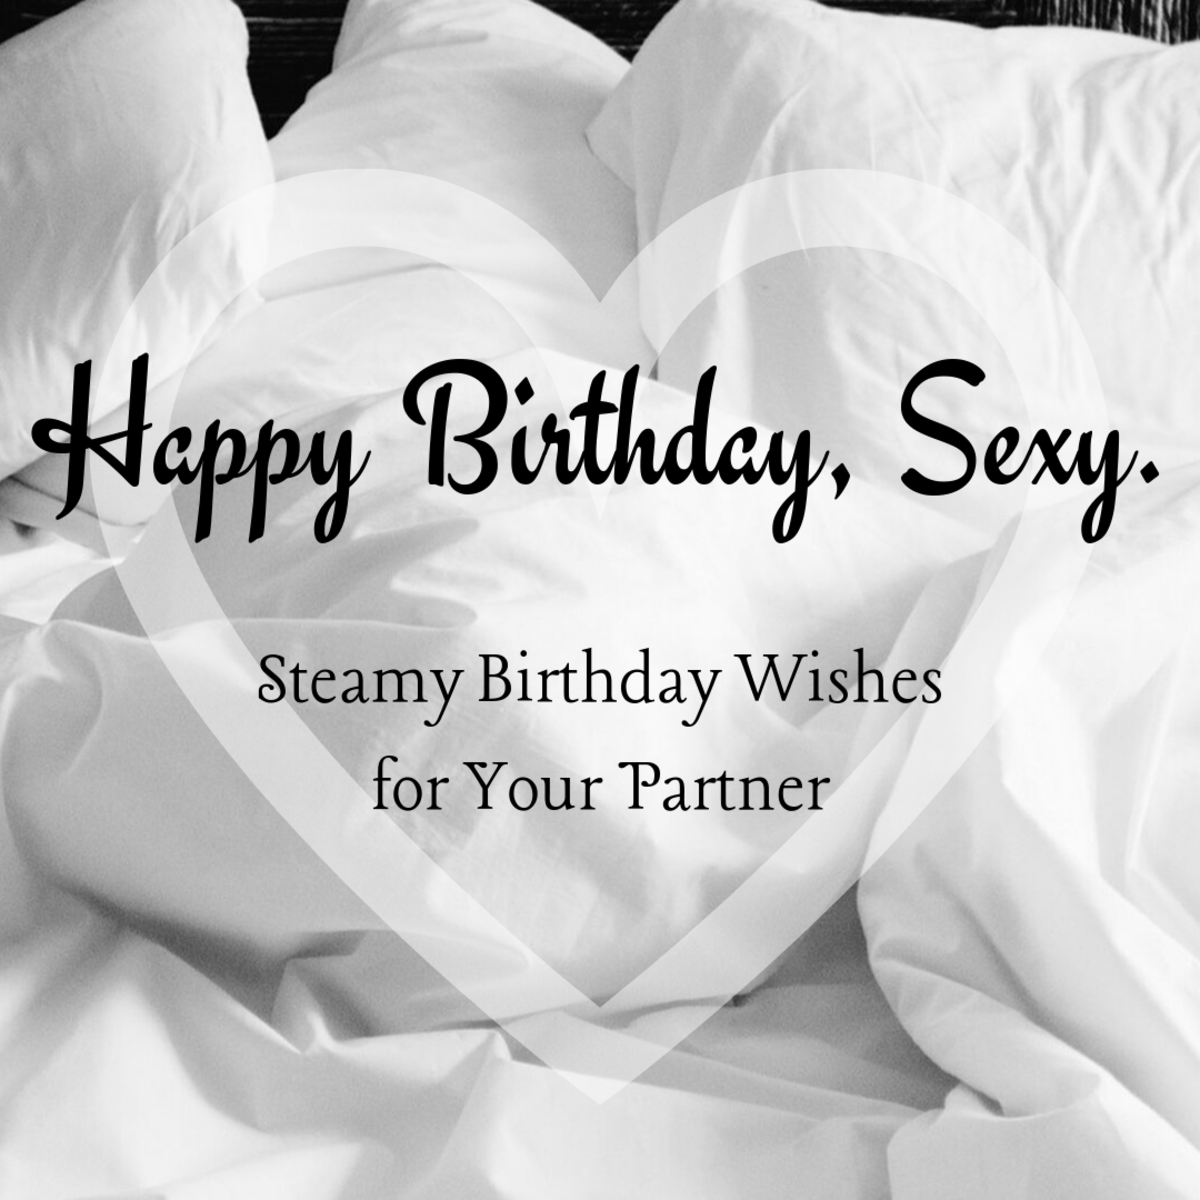 bonnie wedge share sexy happy birthday photos